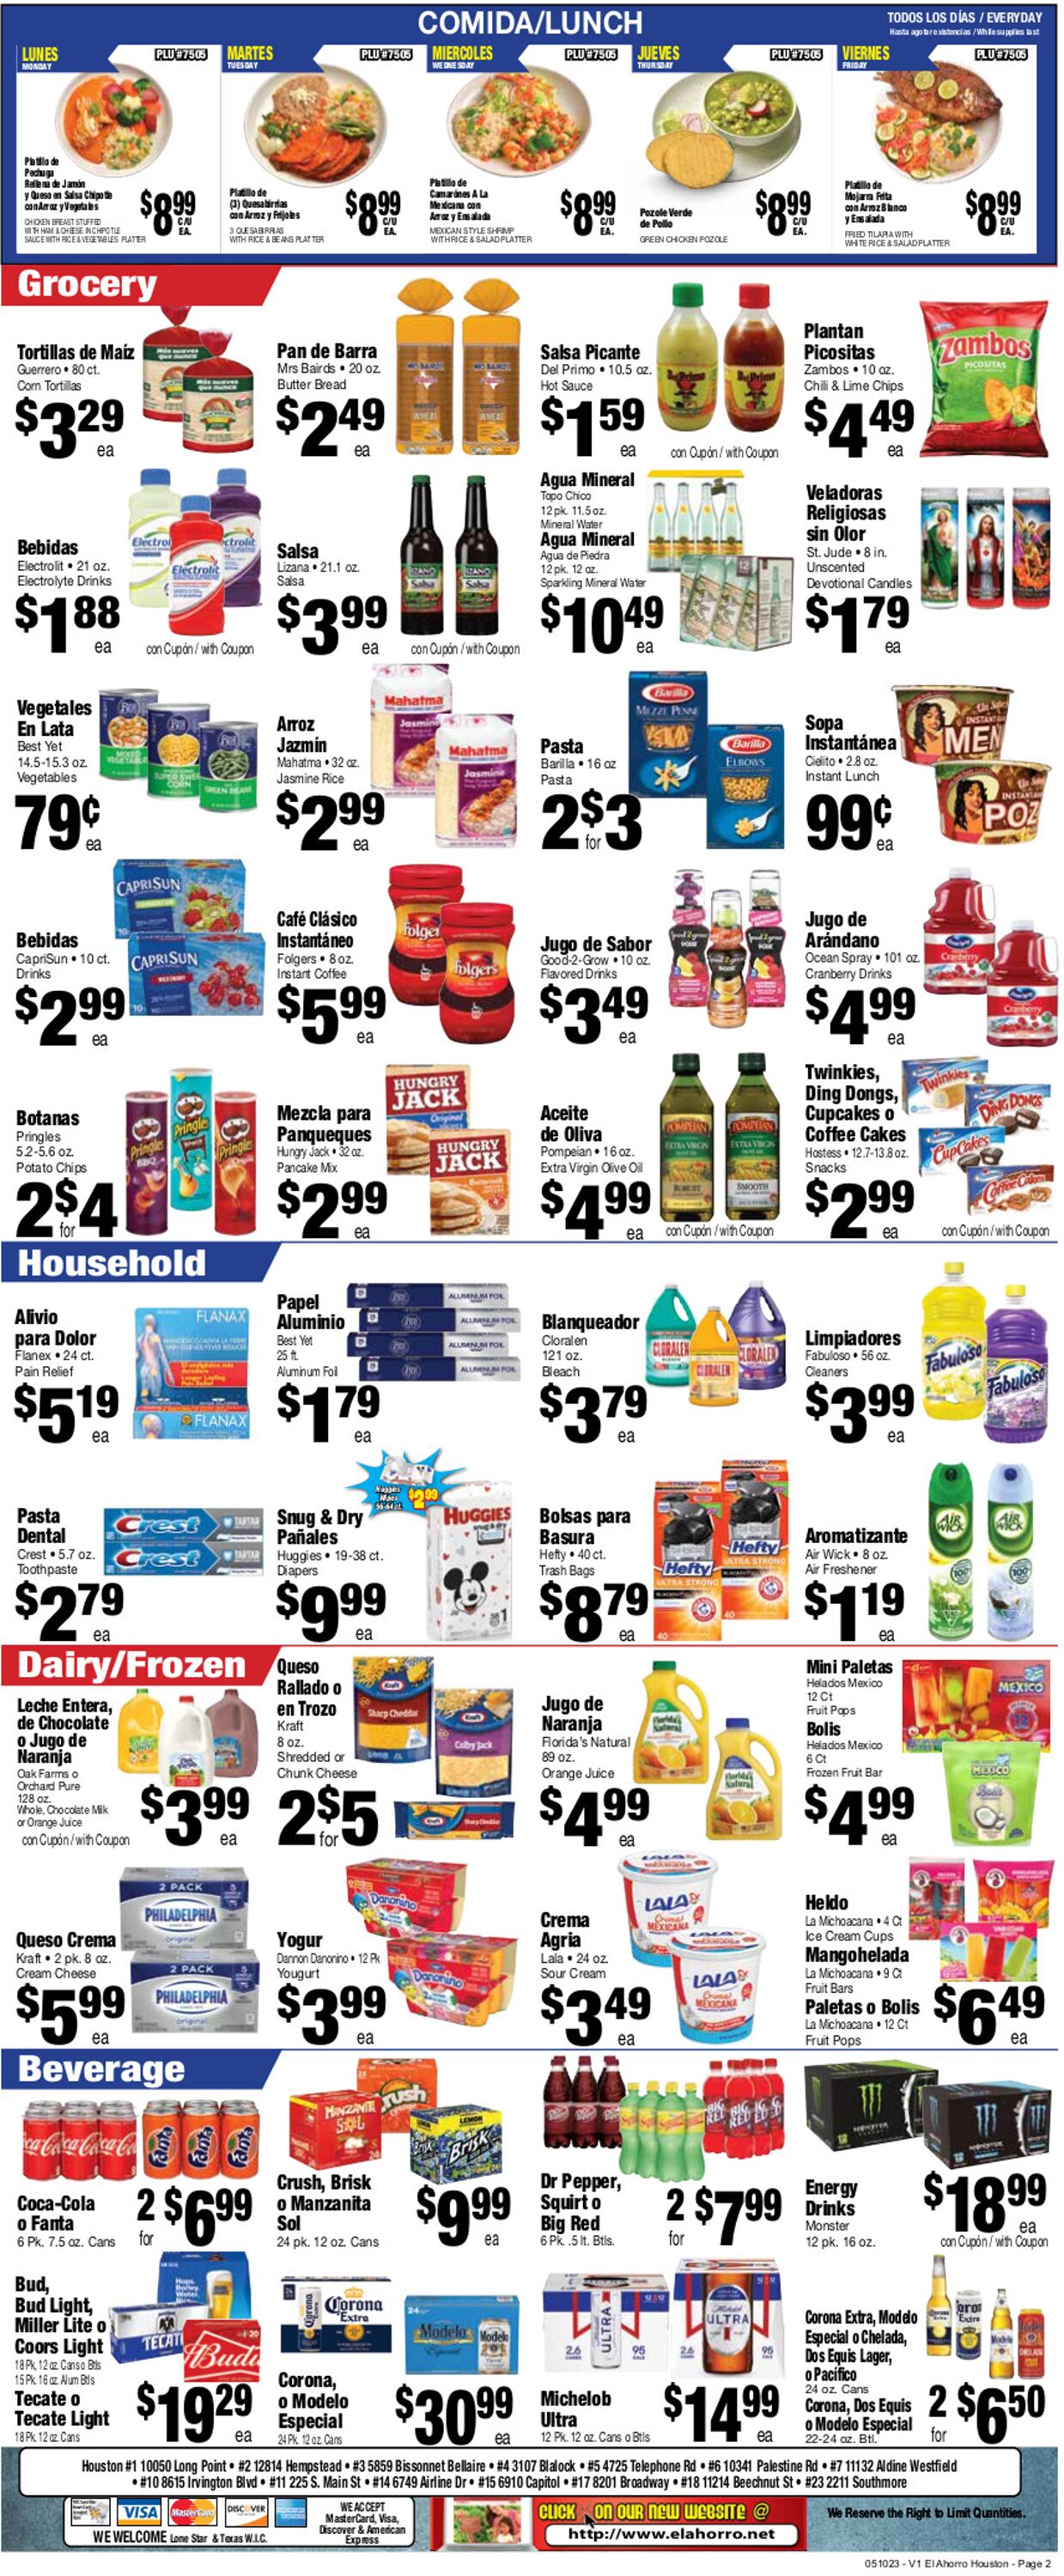 Catalogue El Ahorro Supermarket from 05/10/2023